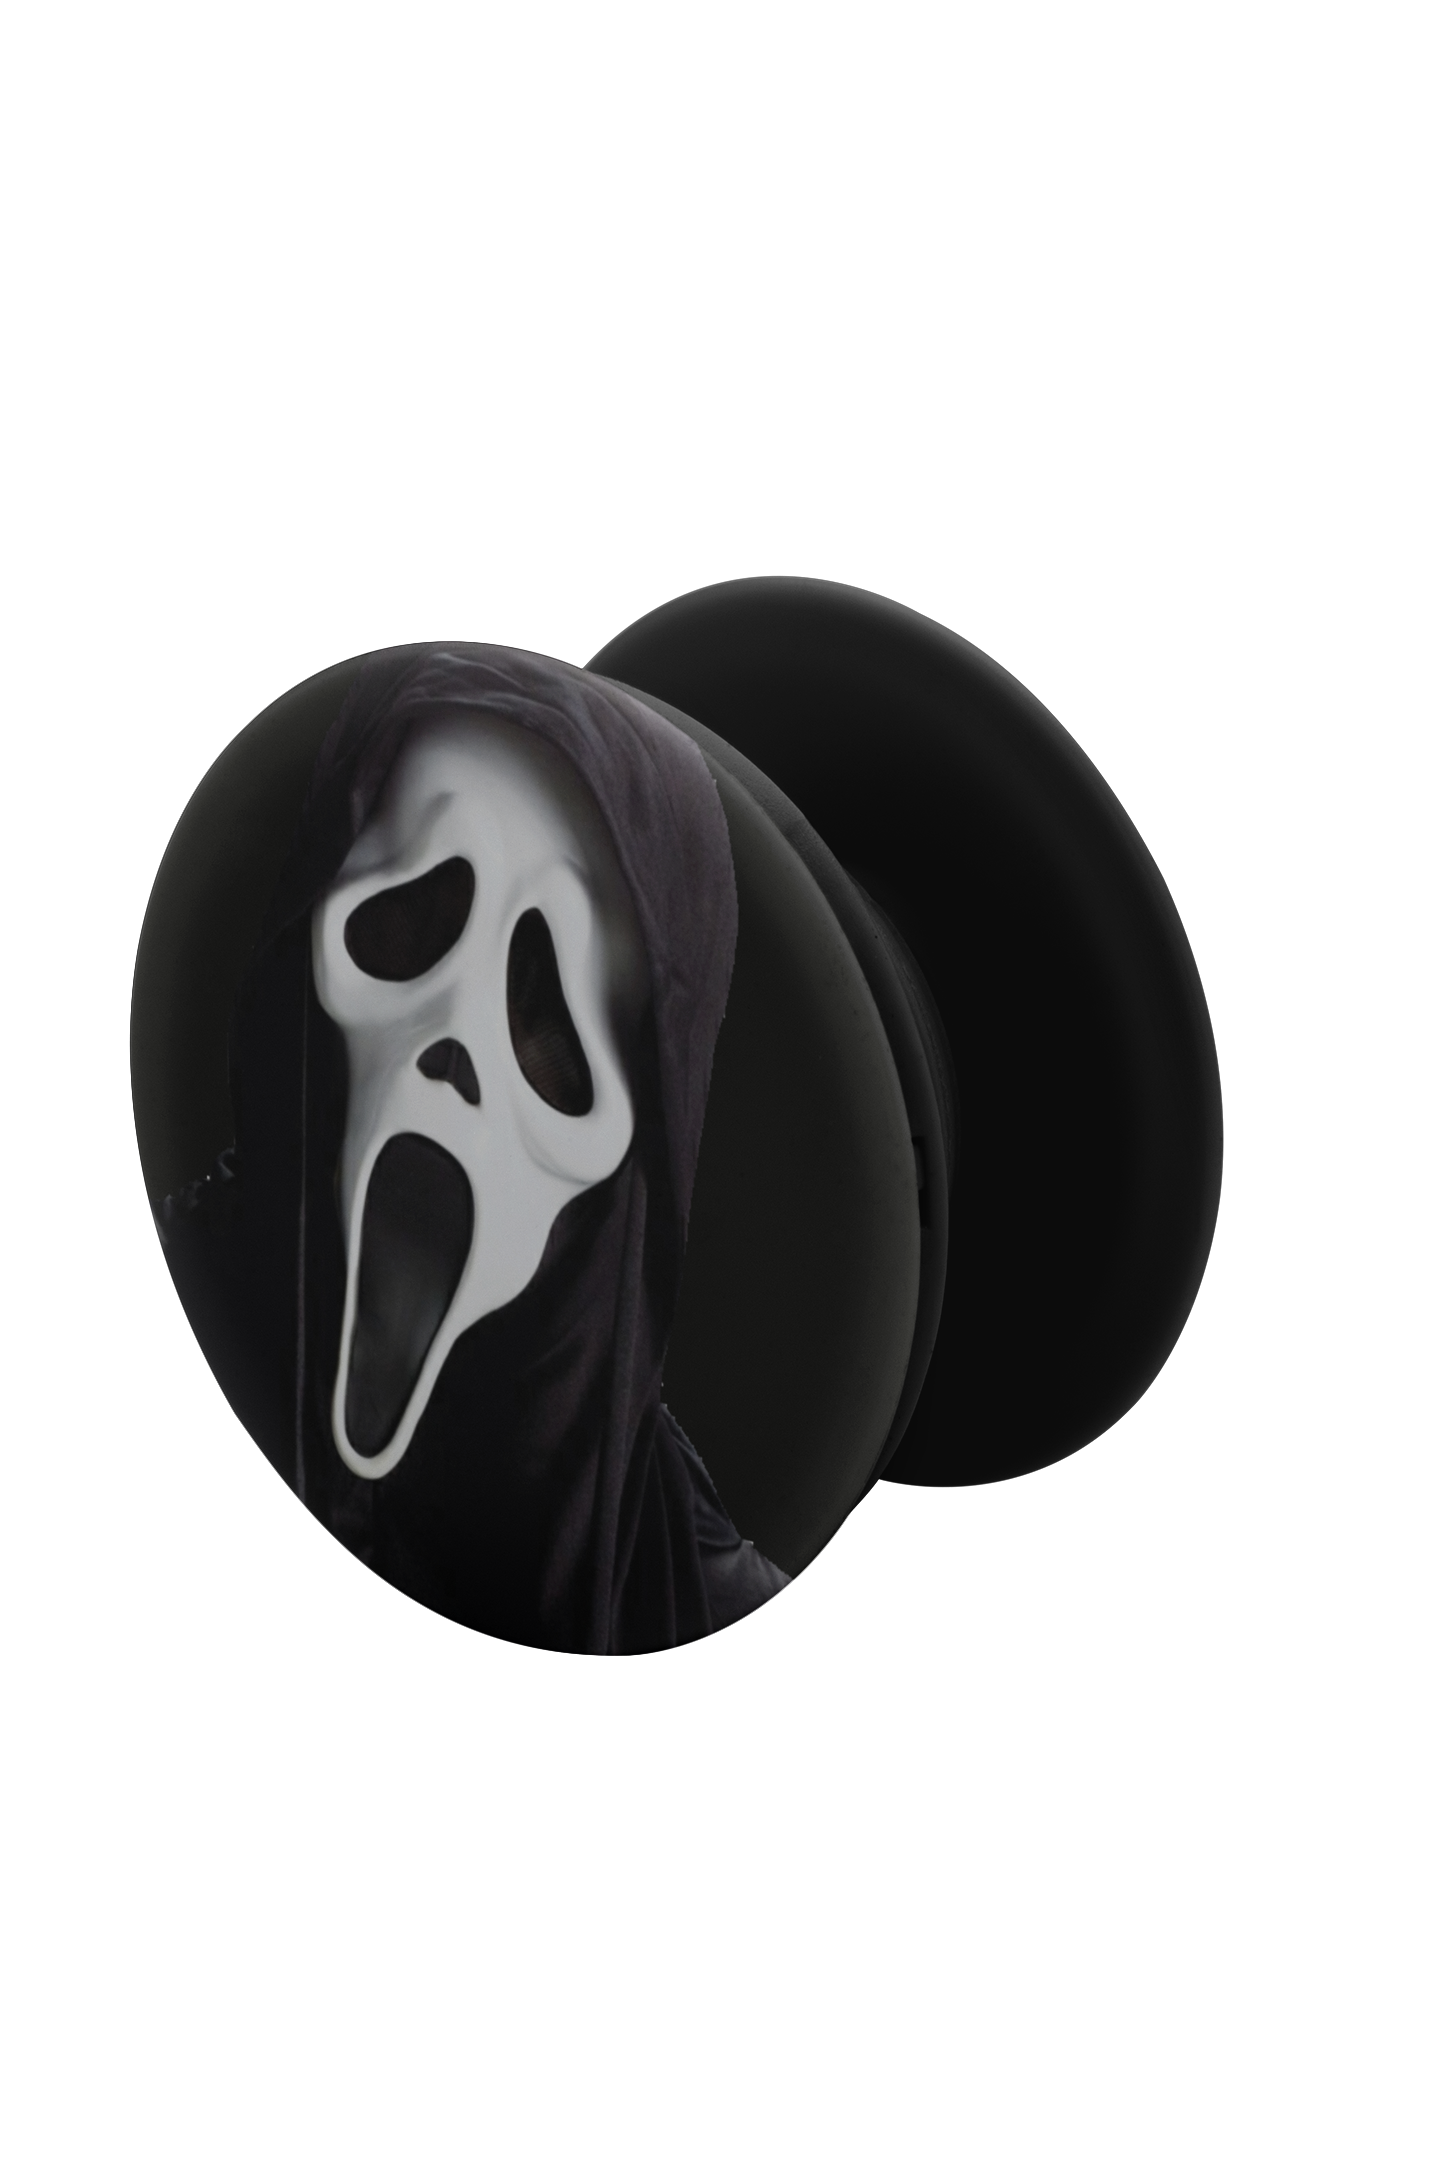 Scream Halloween Phone case